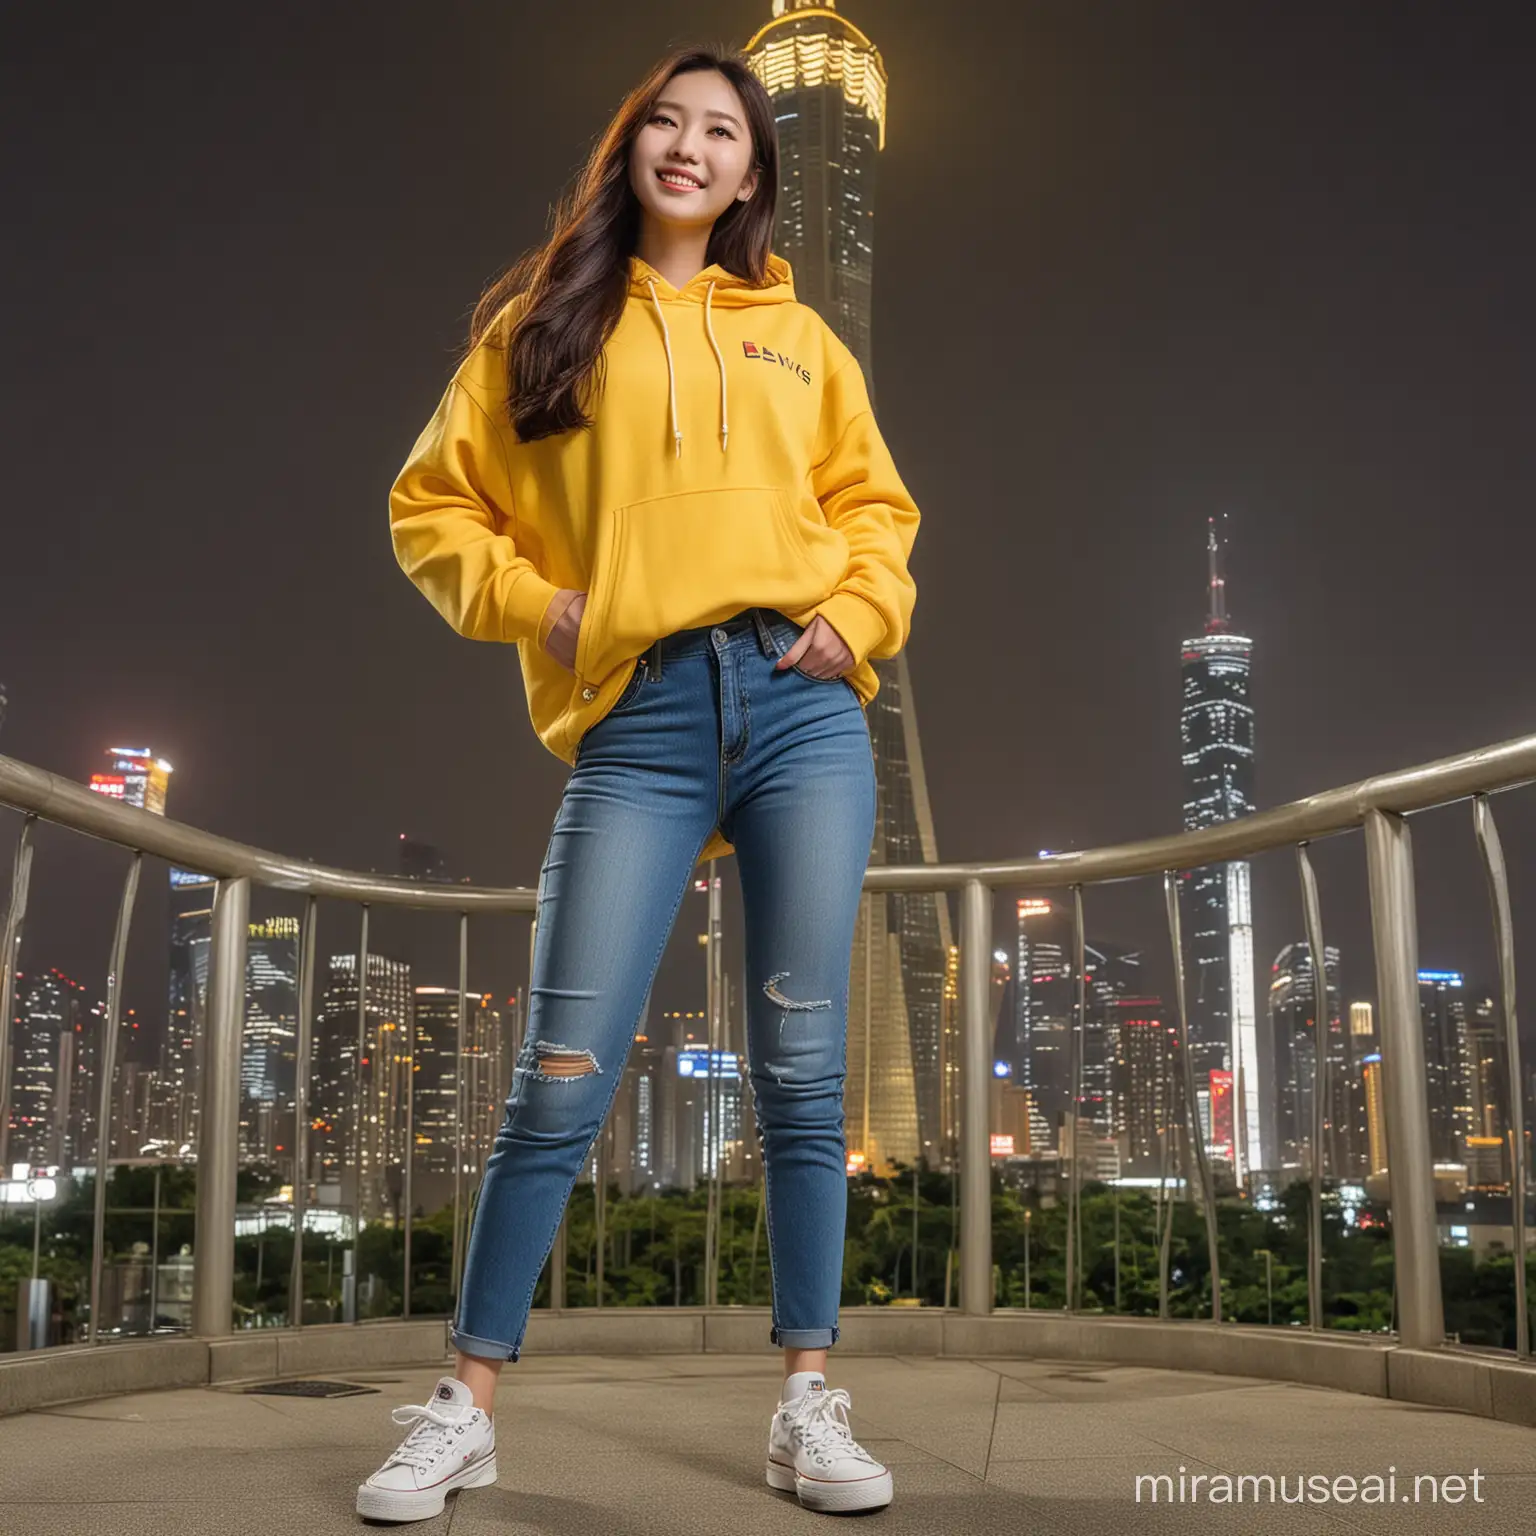 Stylish Korean Woman Poses Under Taipei 101 Tower at Night